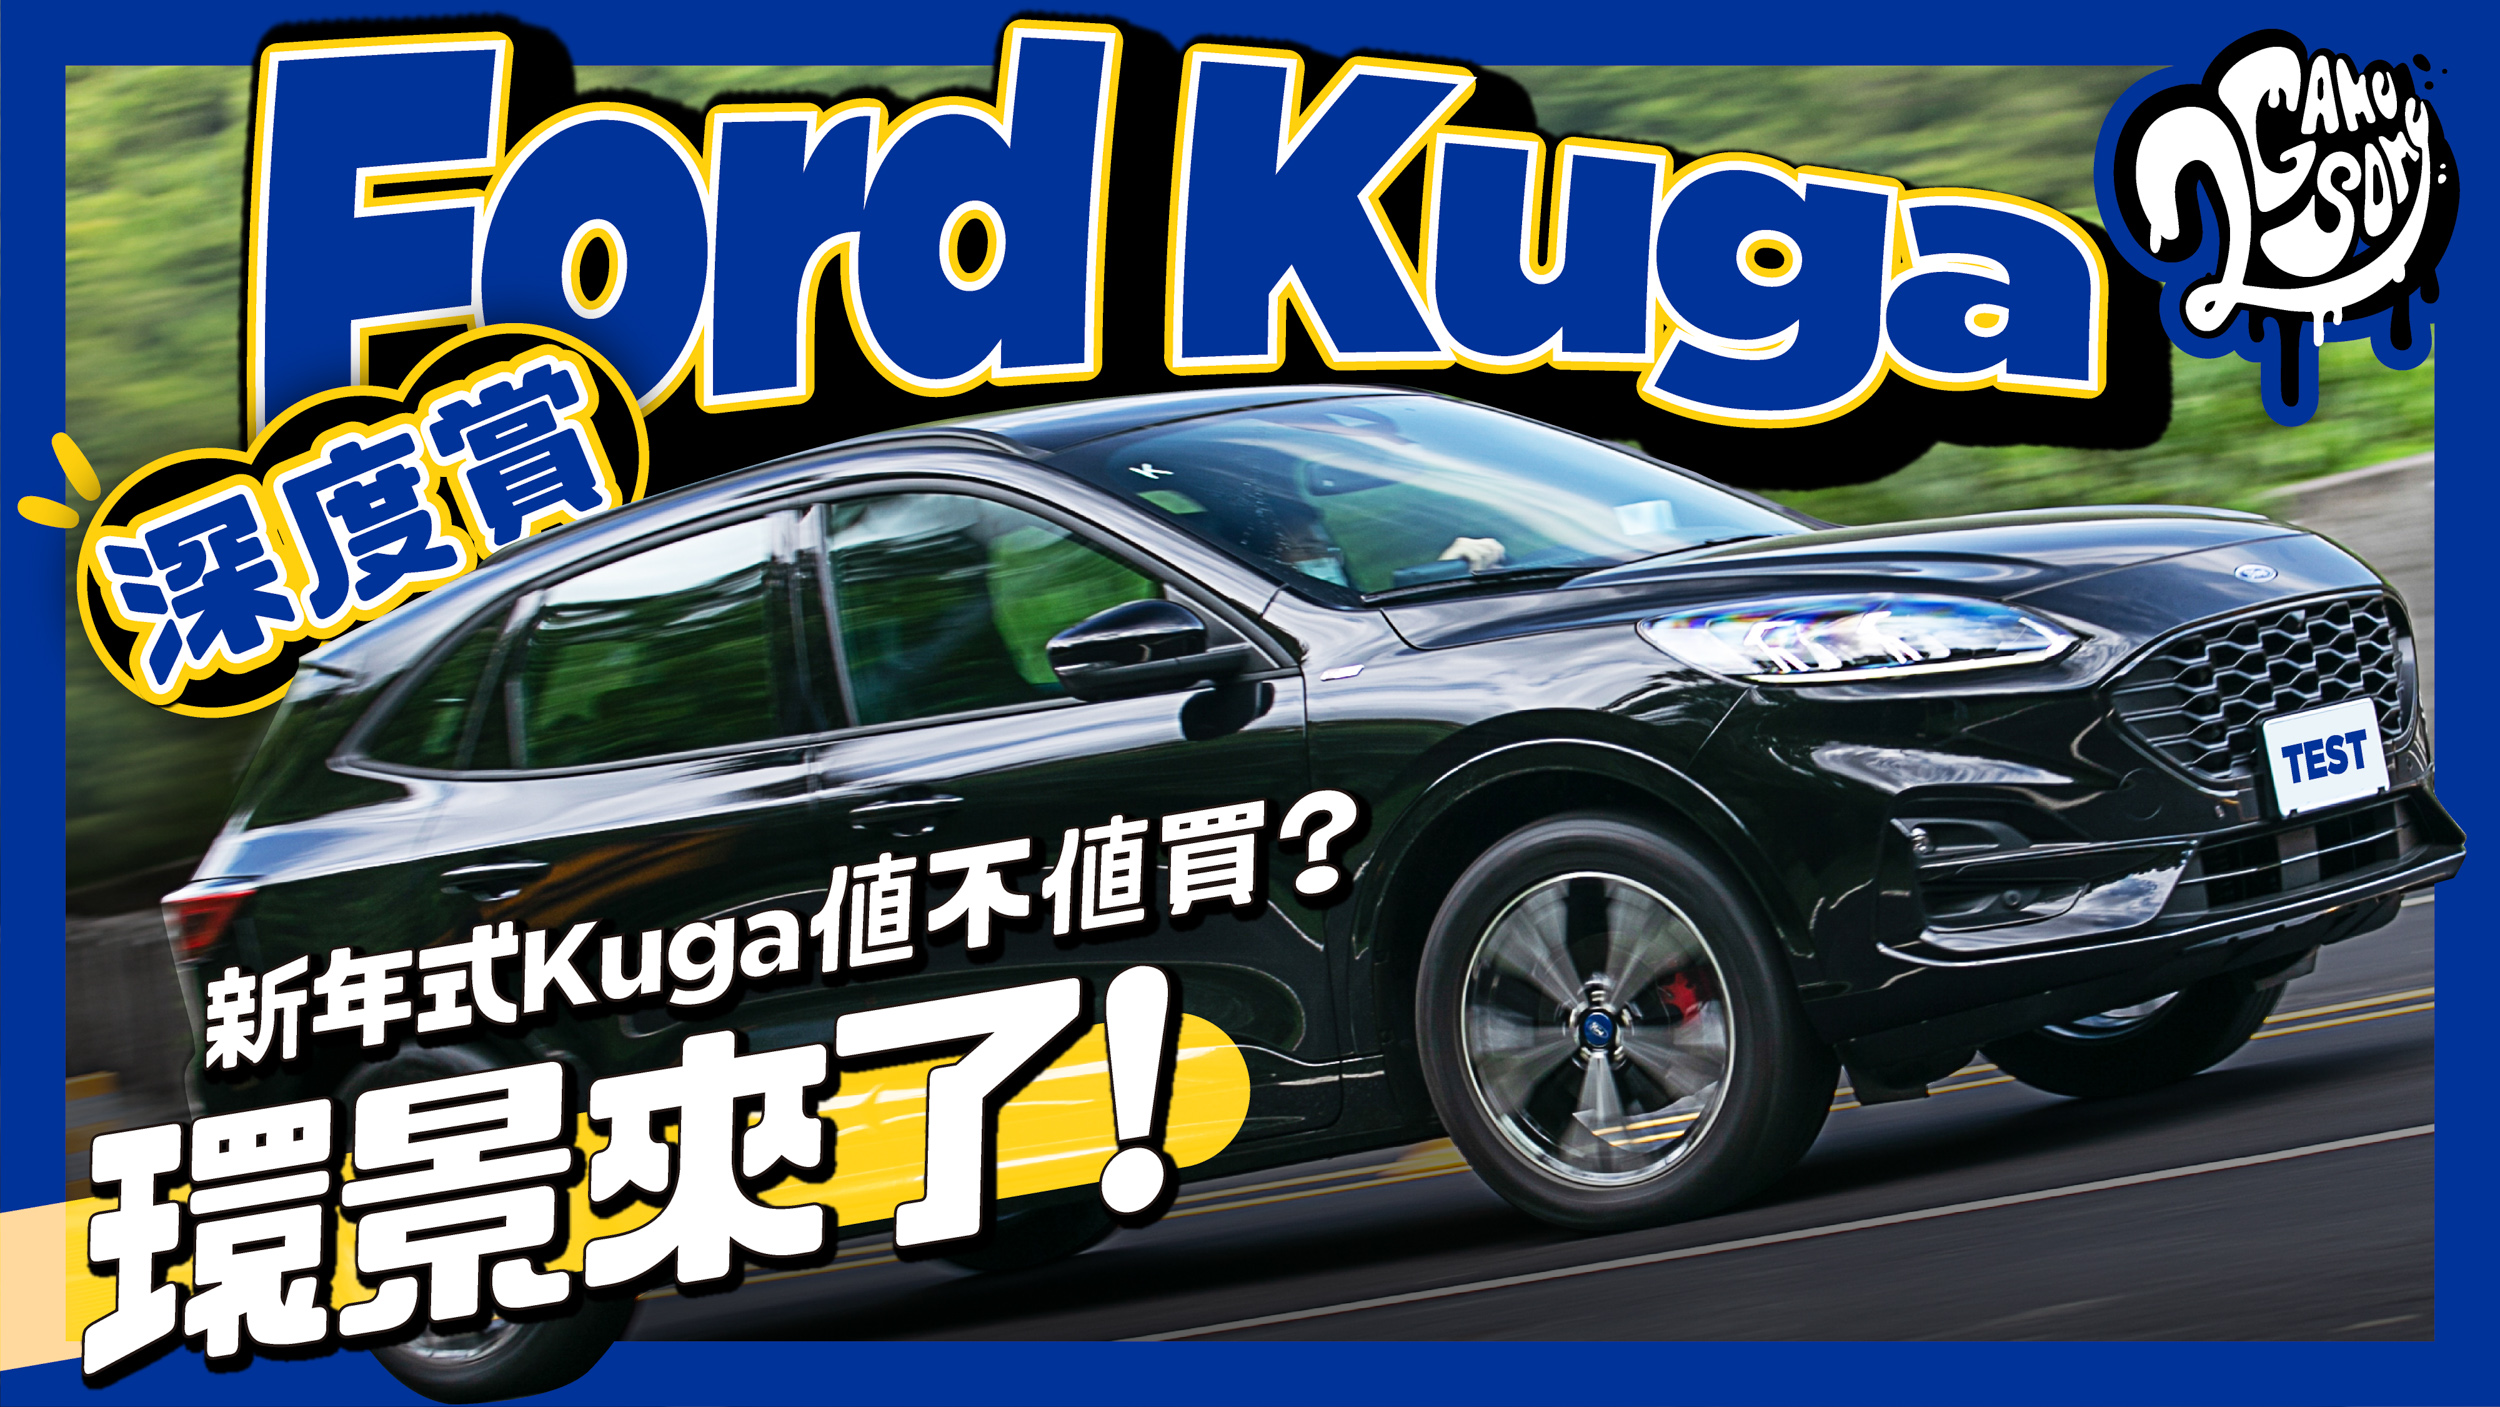 Ford Kuga X 深度賞｜環景來了！新年式 Kuga 值不值買分析給你看